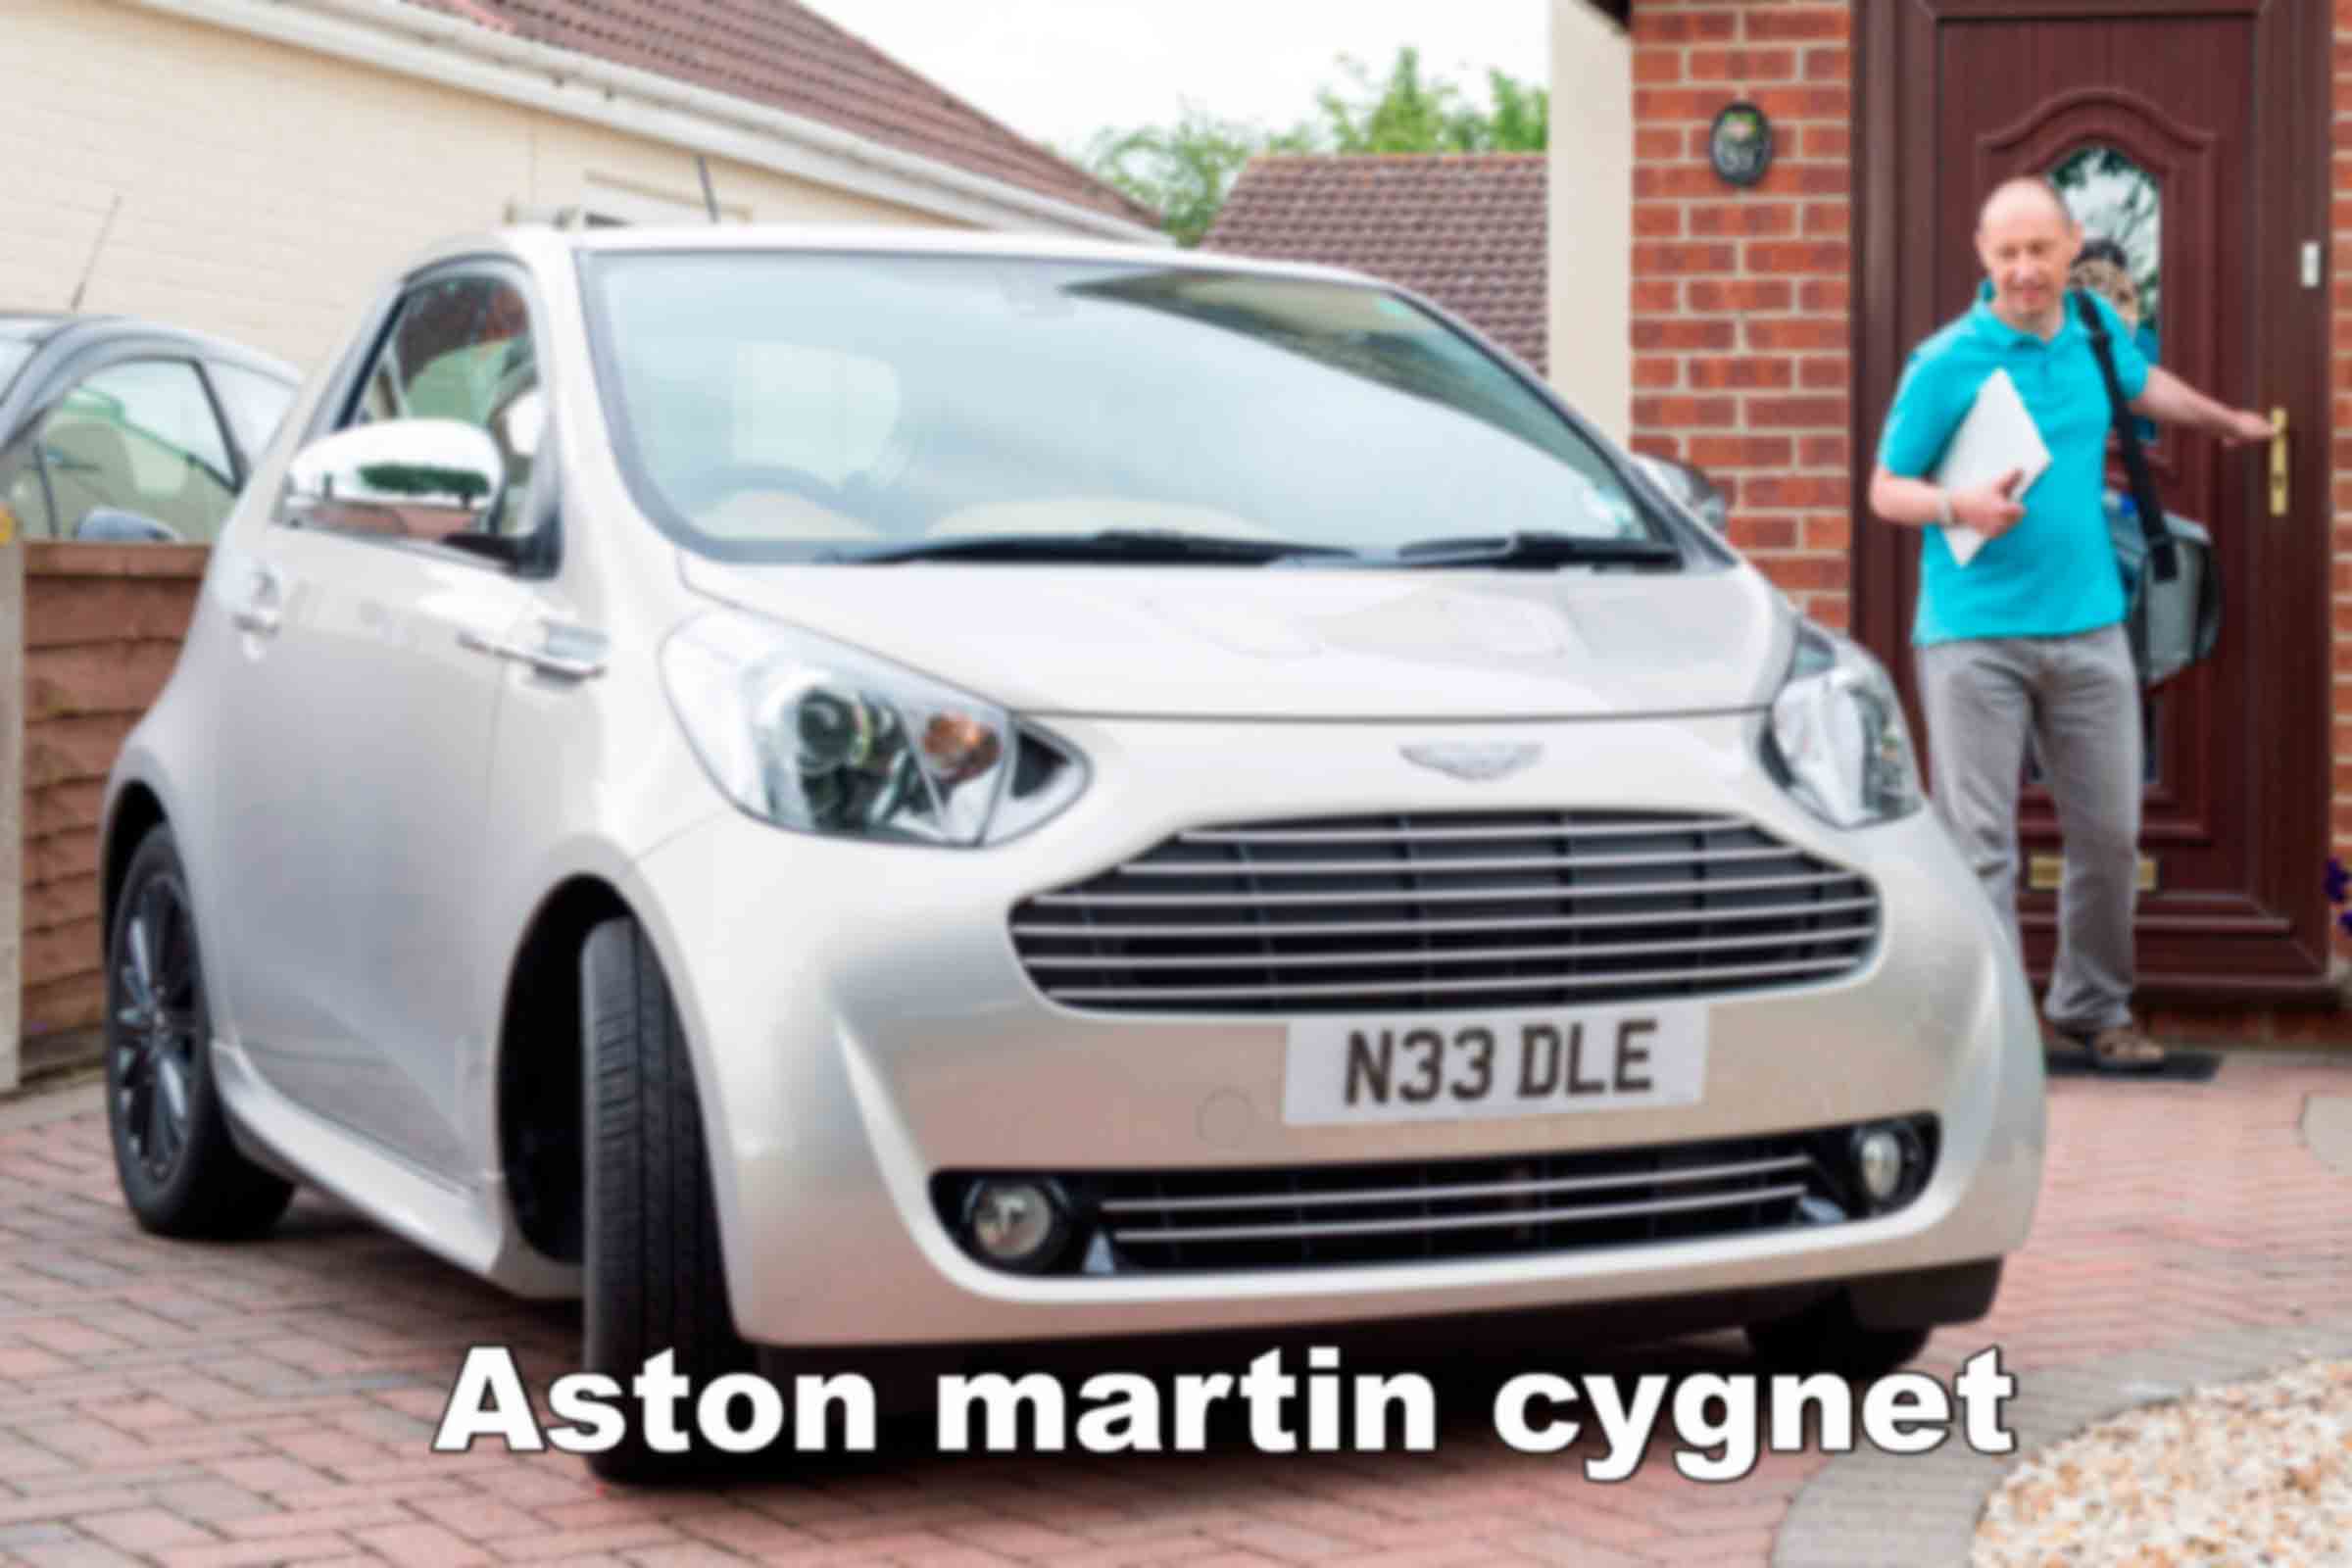 Aston martin cygnet